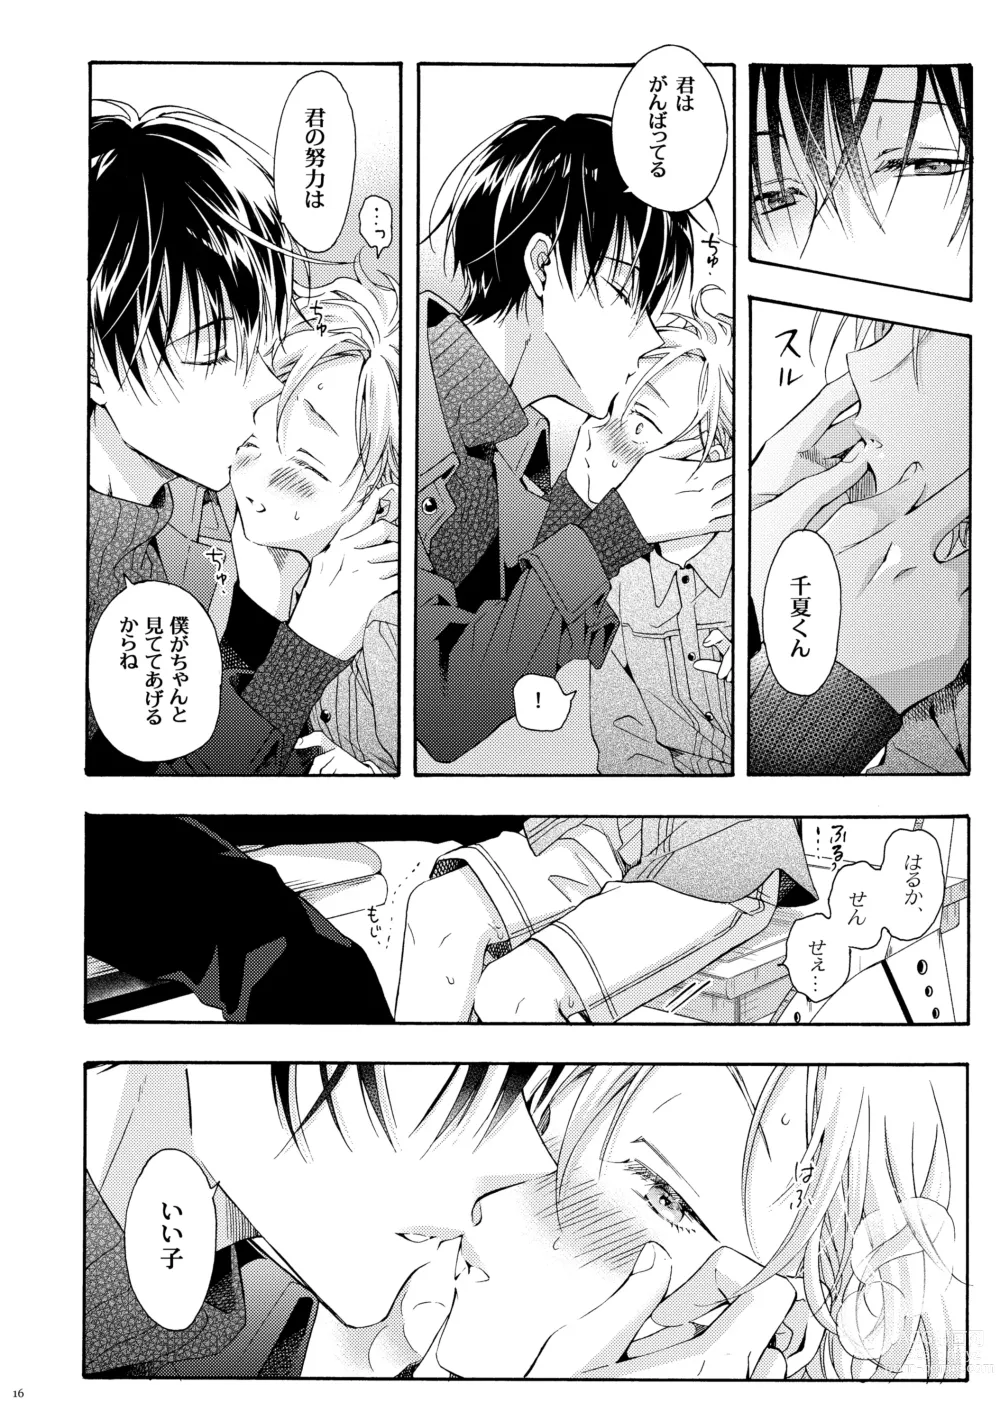 Page 15 of manga Boku no Tame no Omega